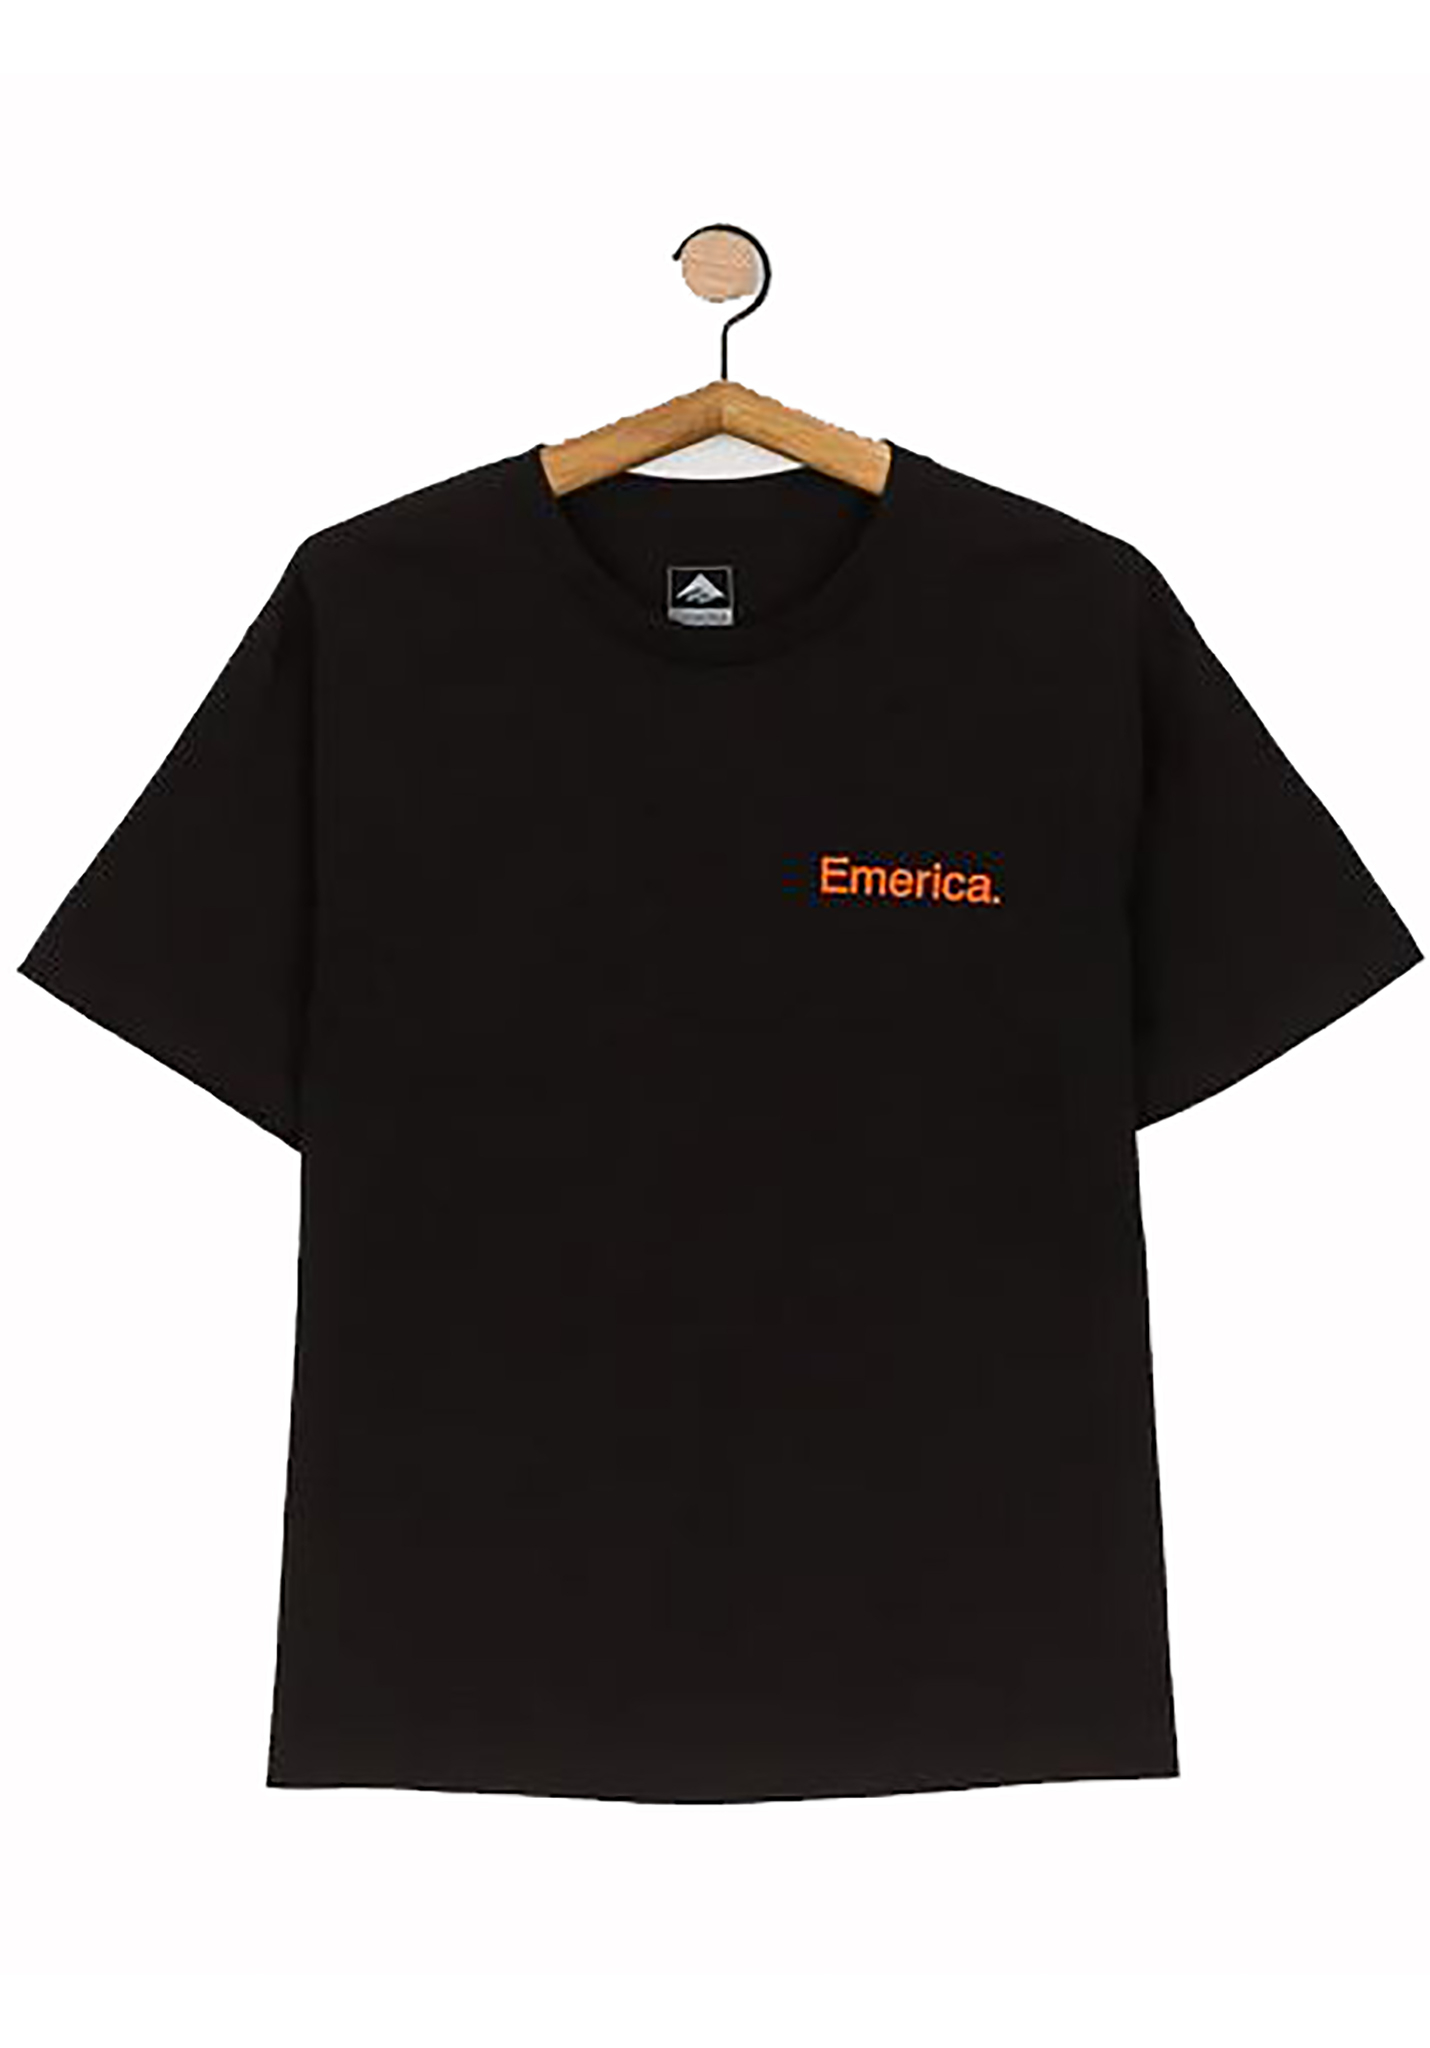 Emerica Pure Logo S/S T-Shirt schwarz-orange L